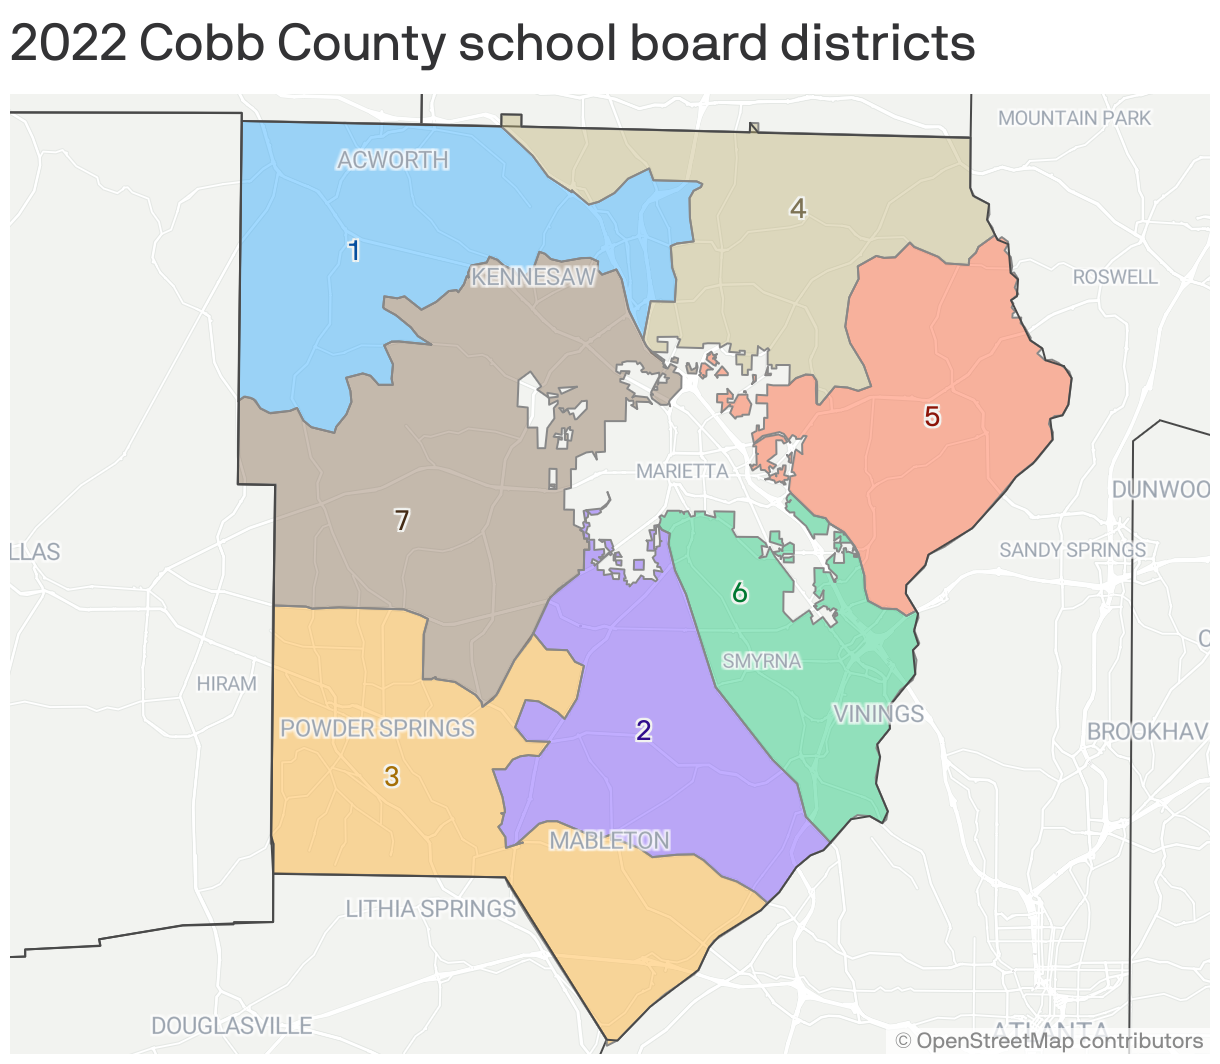 2022 Cobb County school board districts